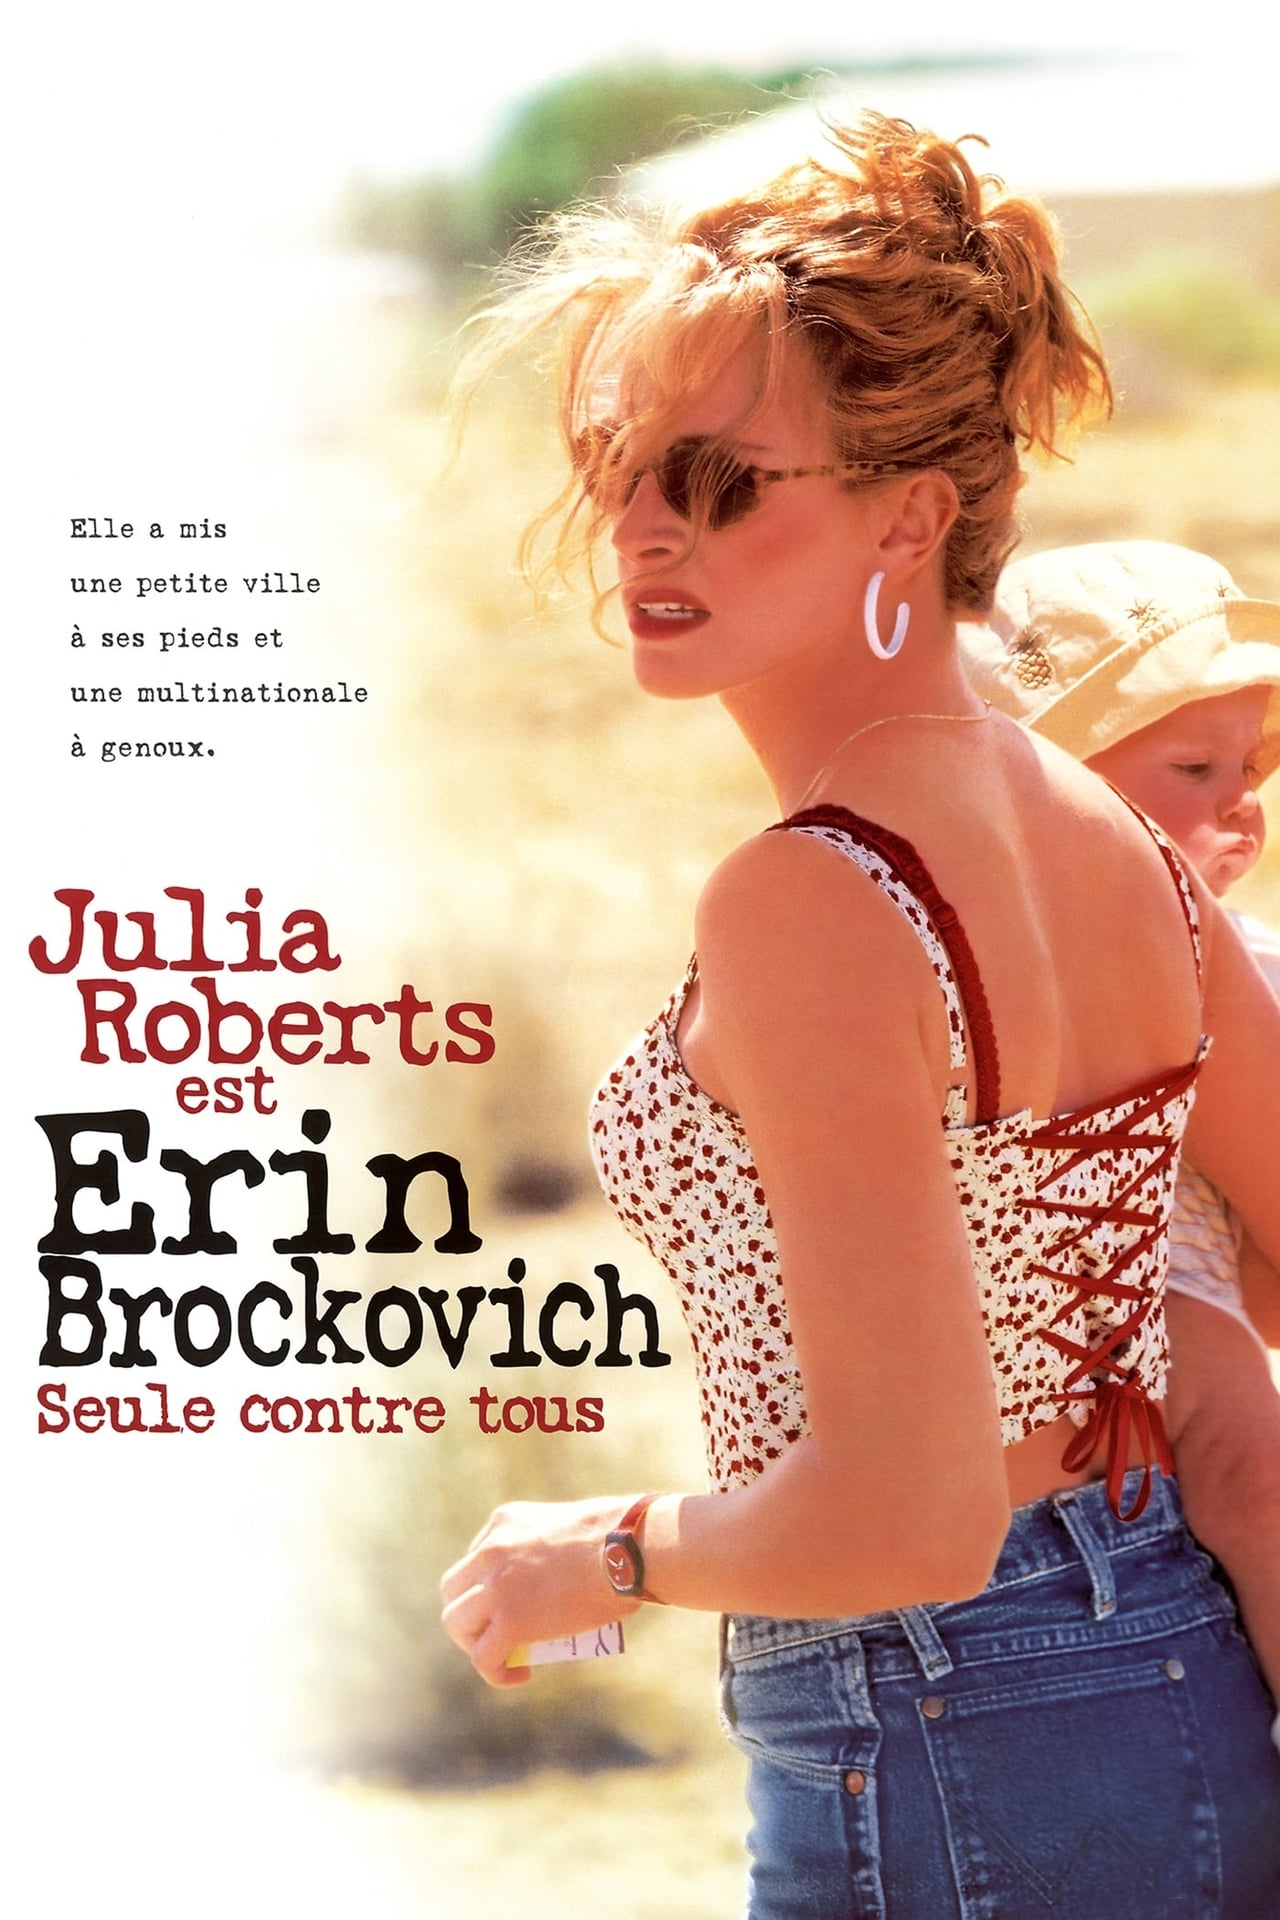 movie review of erin brockovich